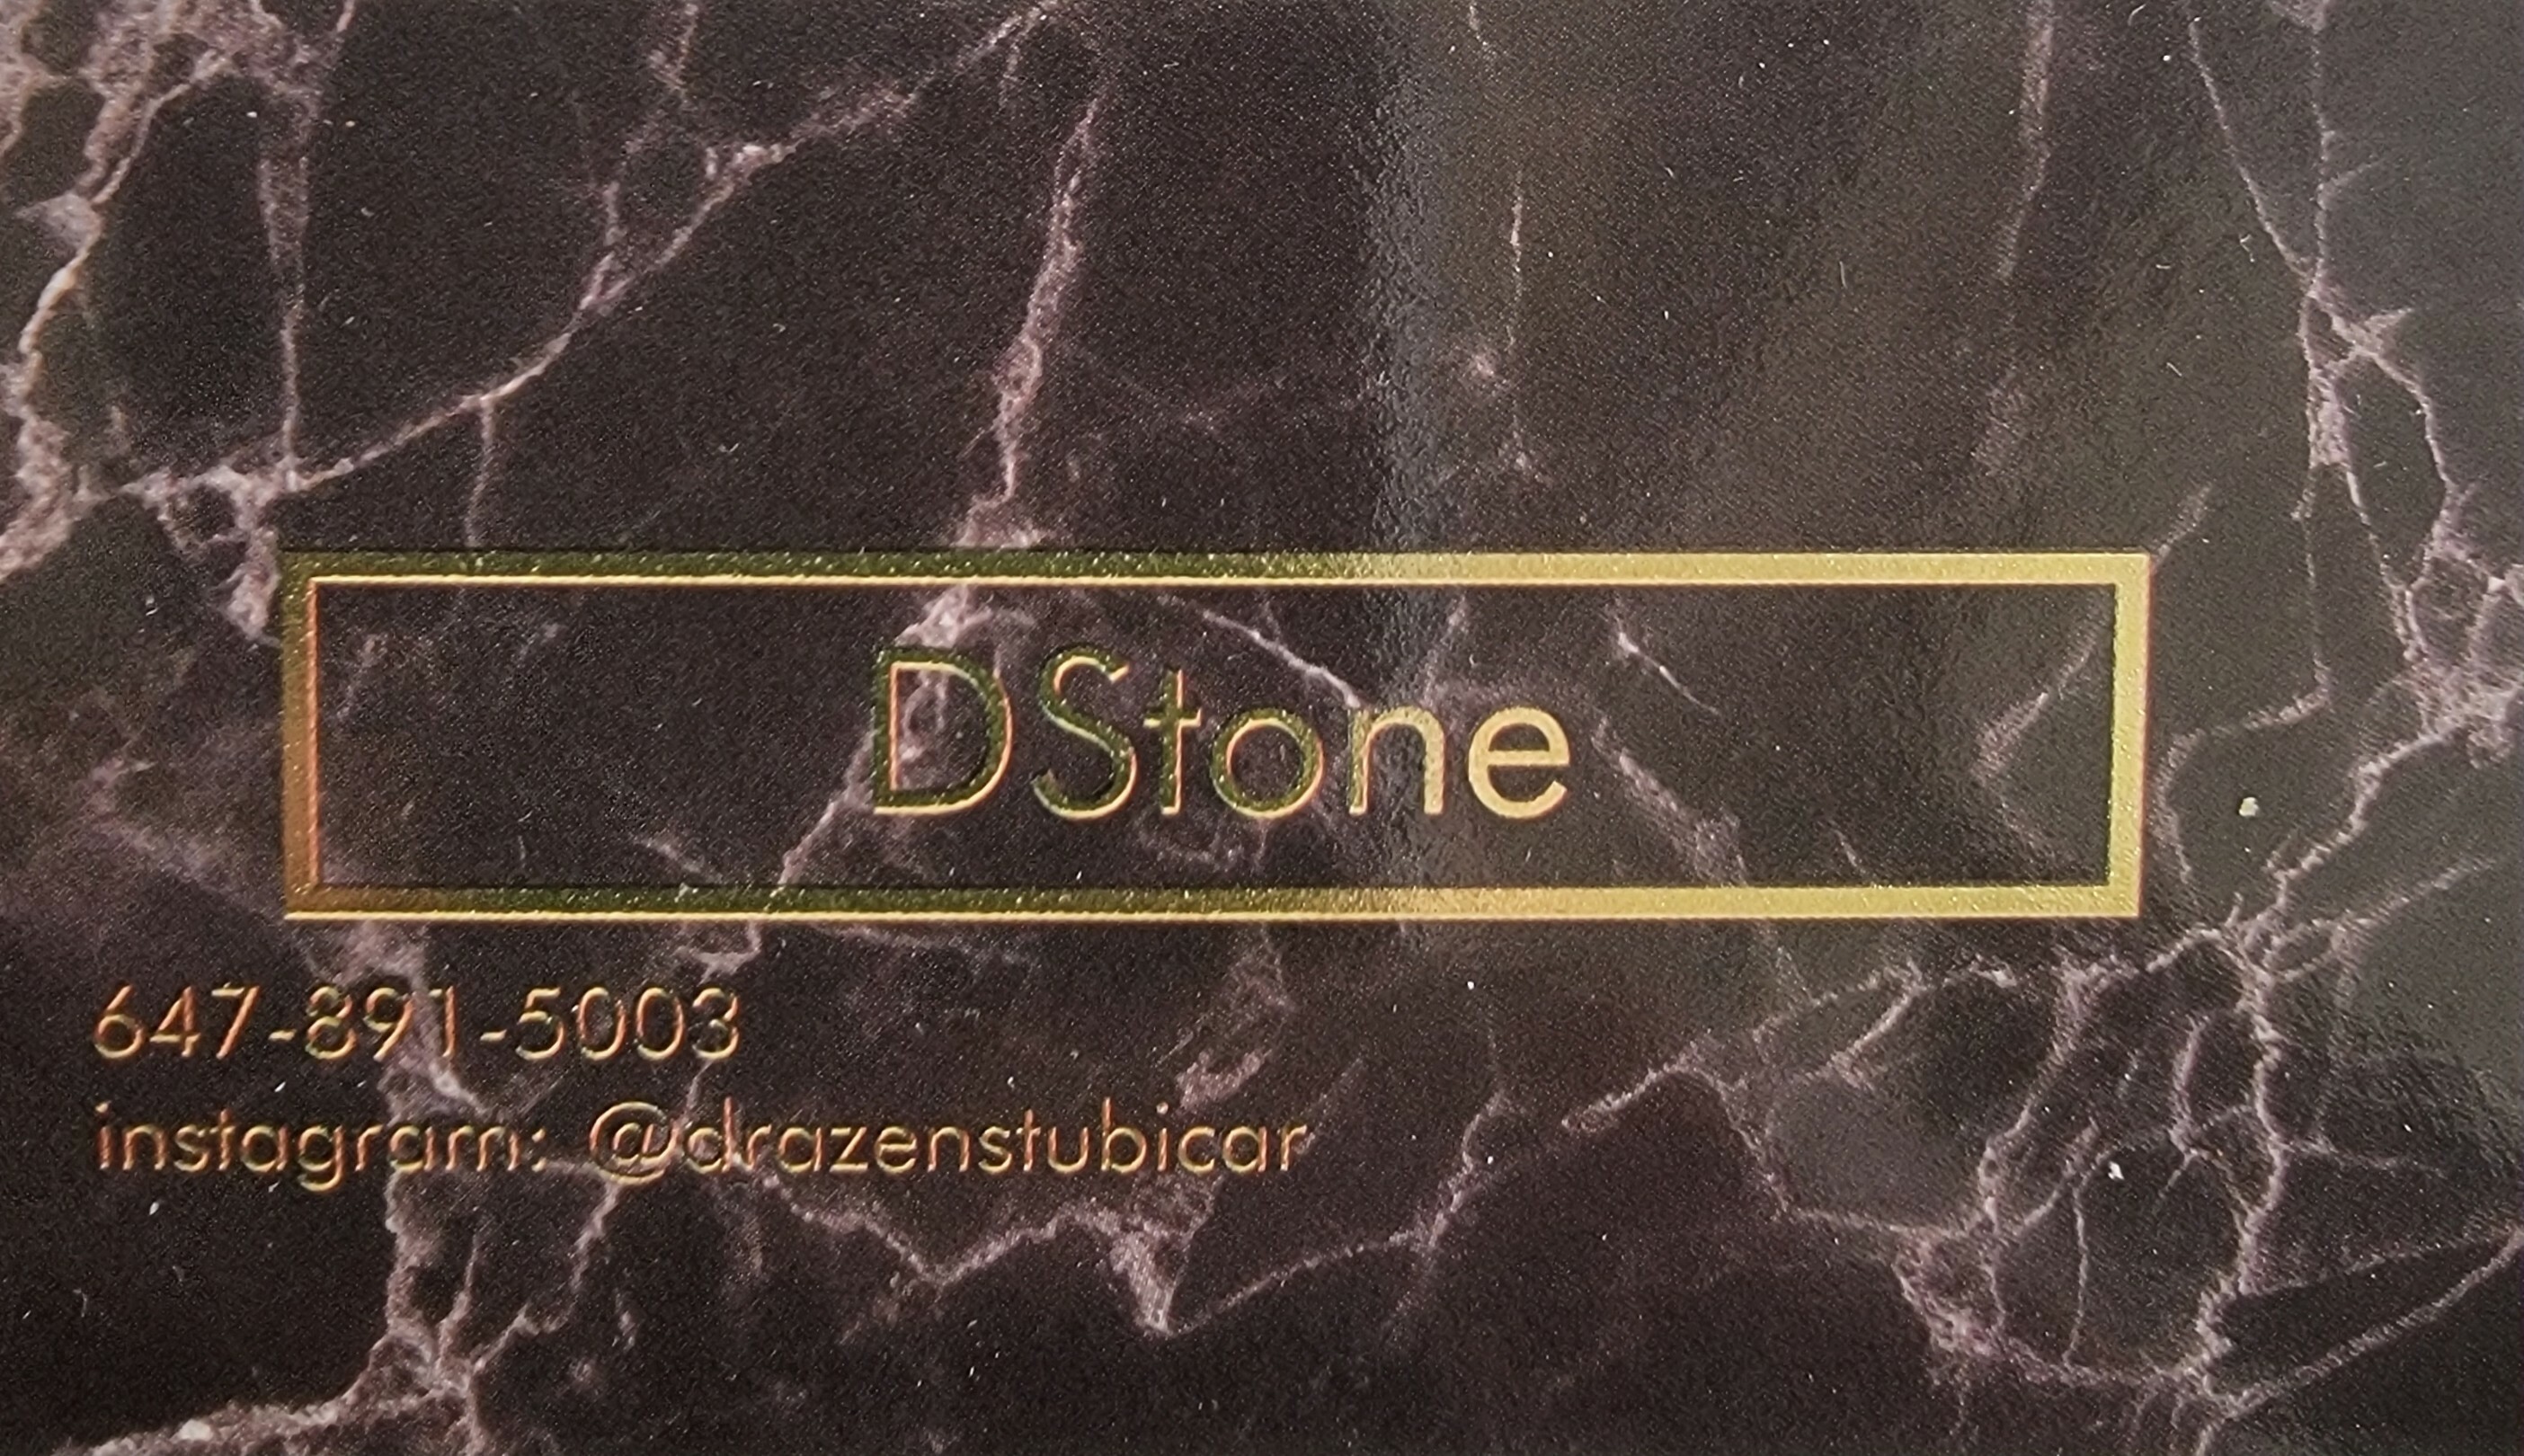 DStone Inc.'s logo